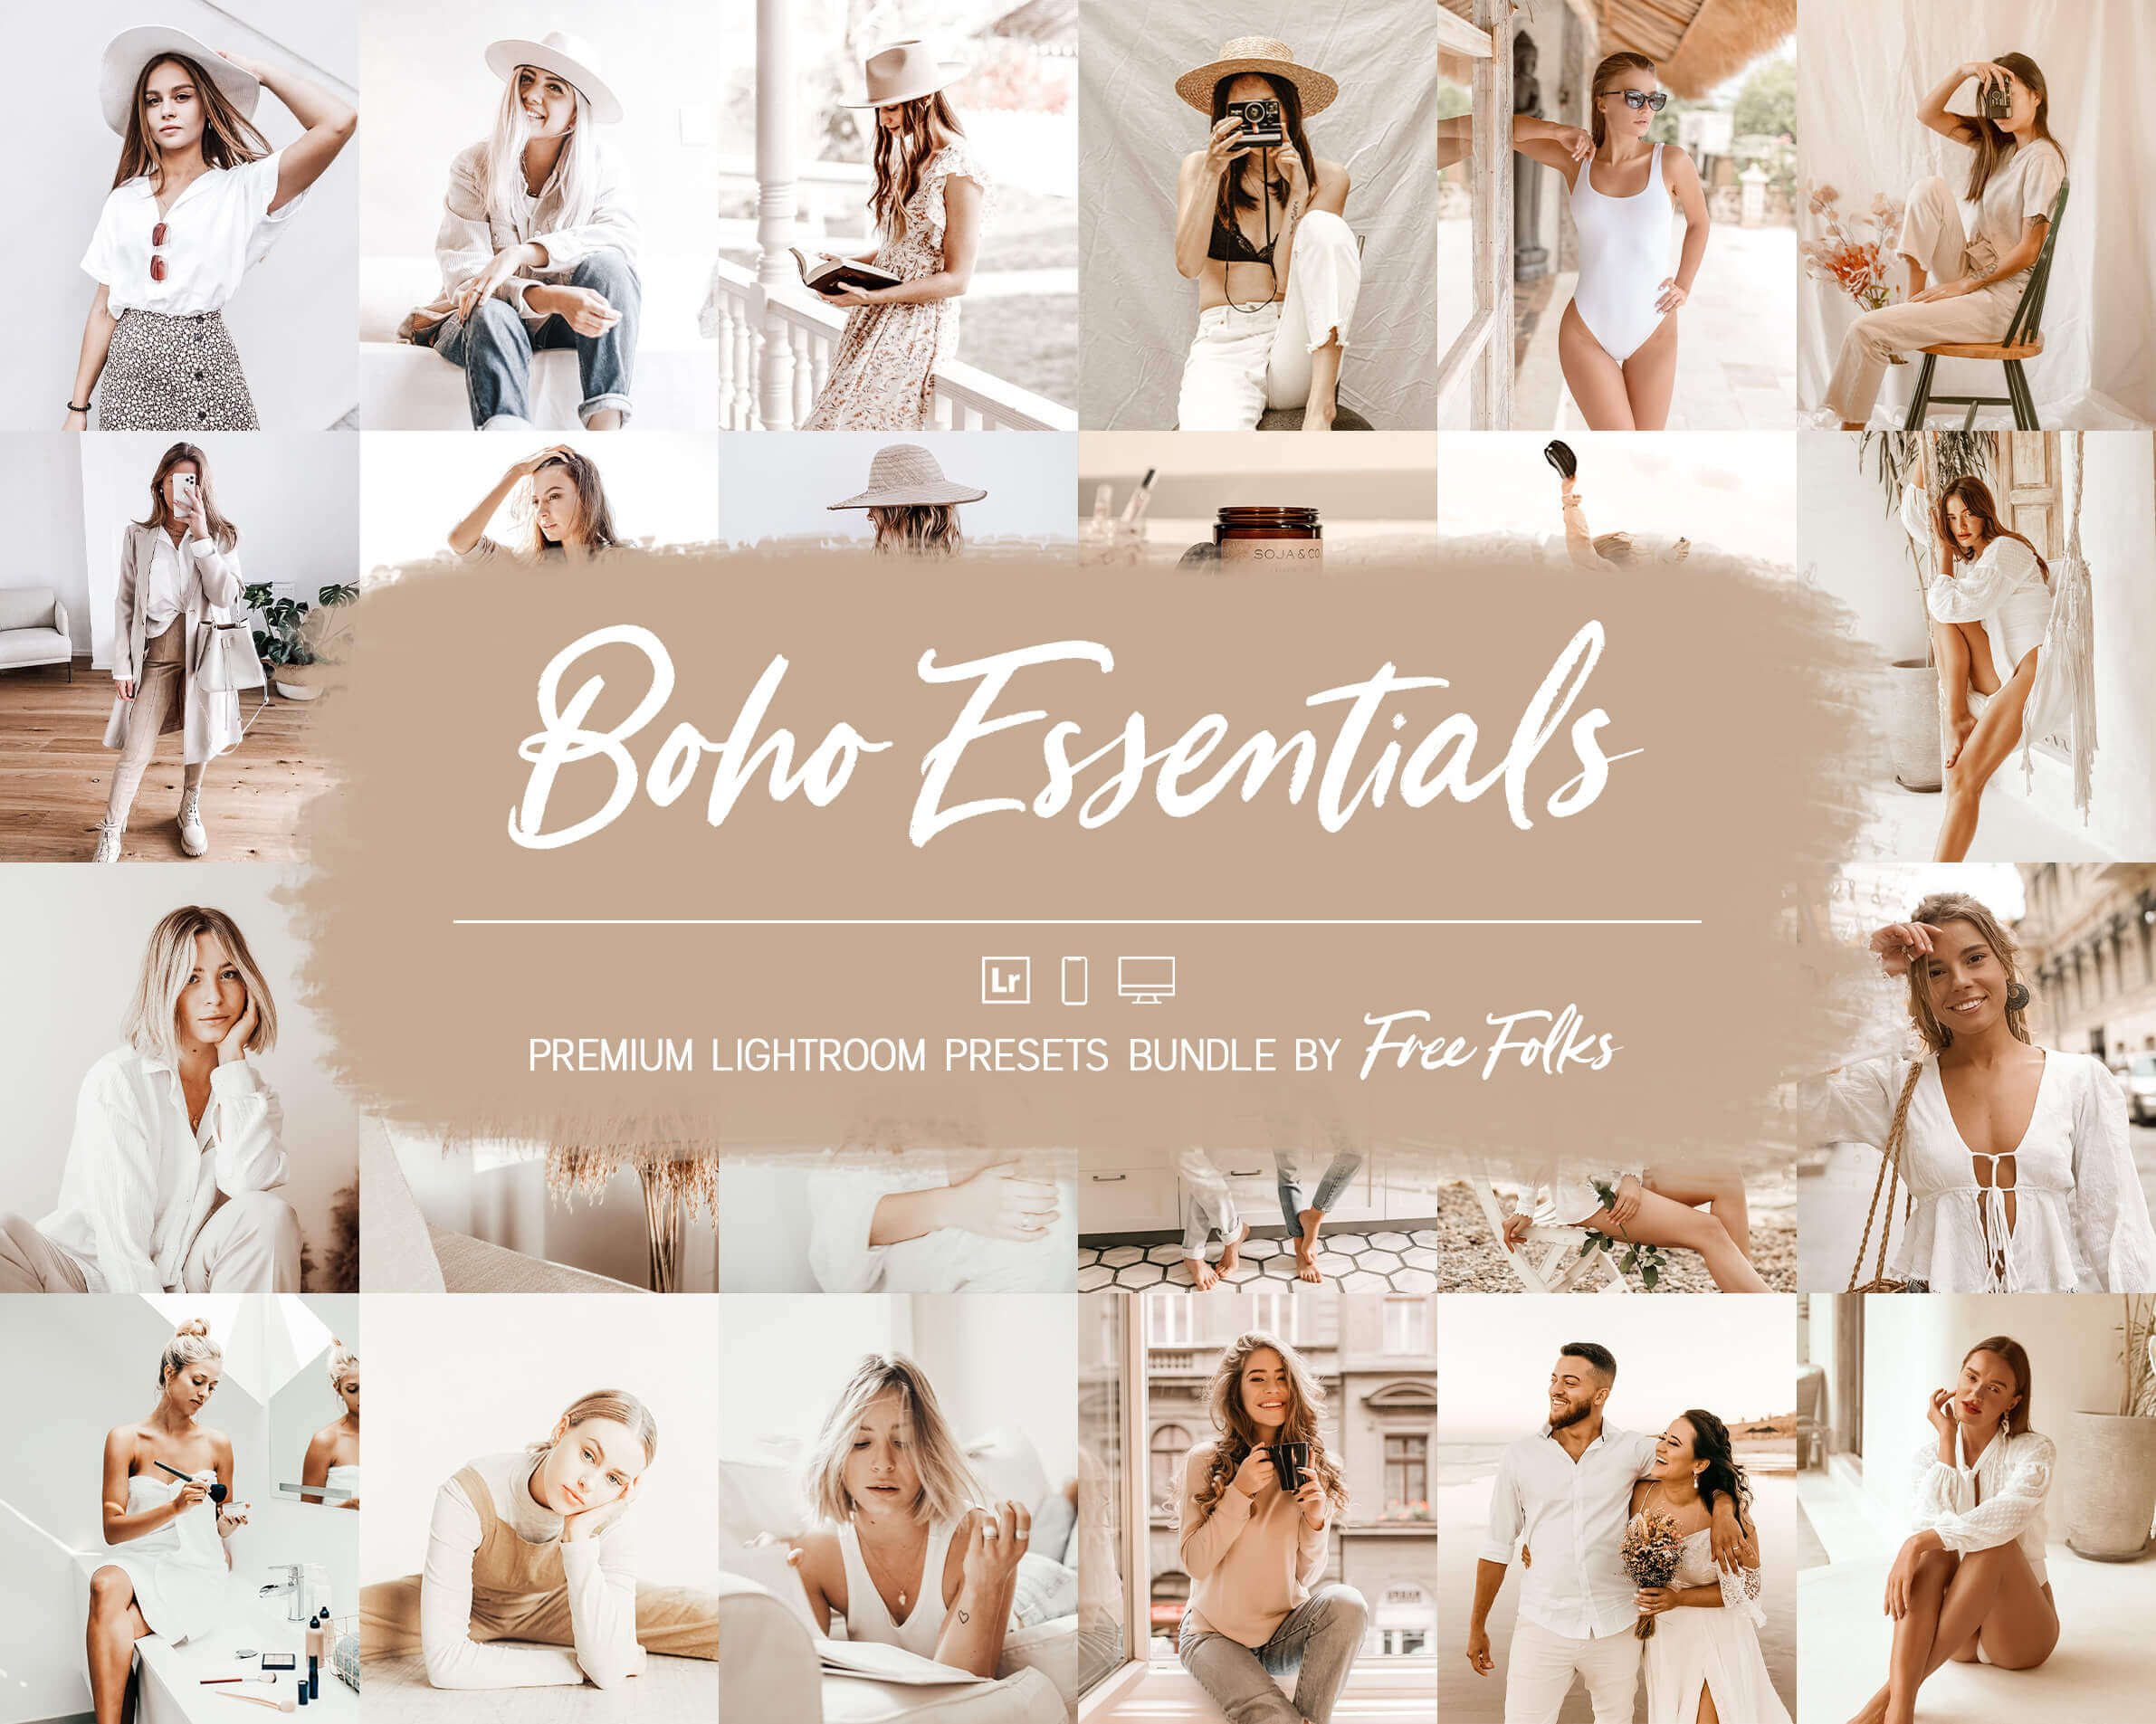 The Boho Essentials (200+ Presets) Lightroom Preset Bundle